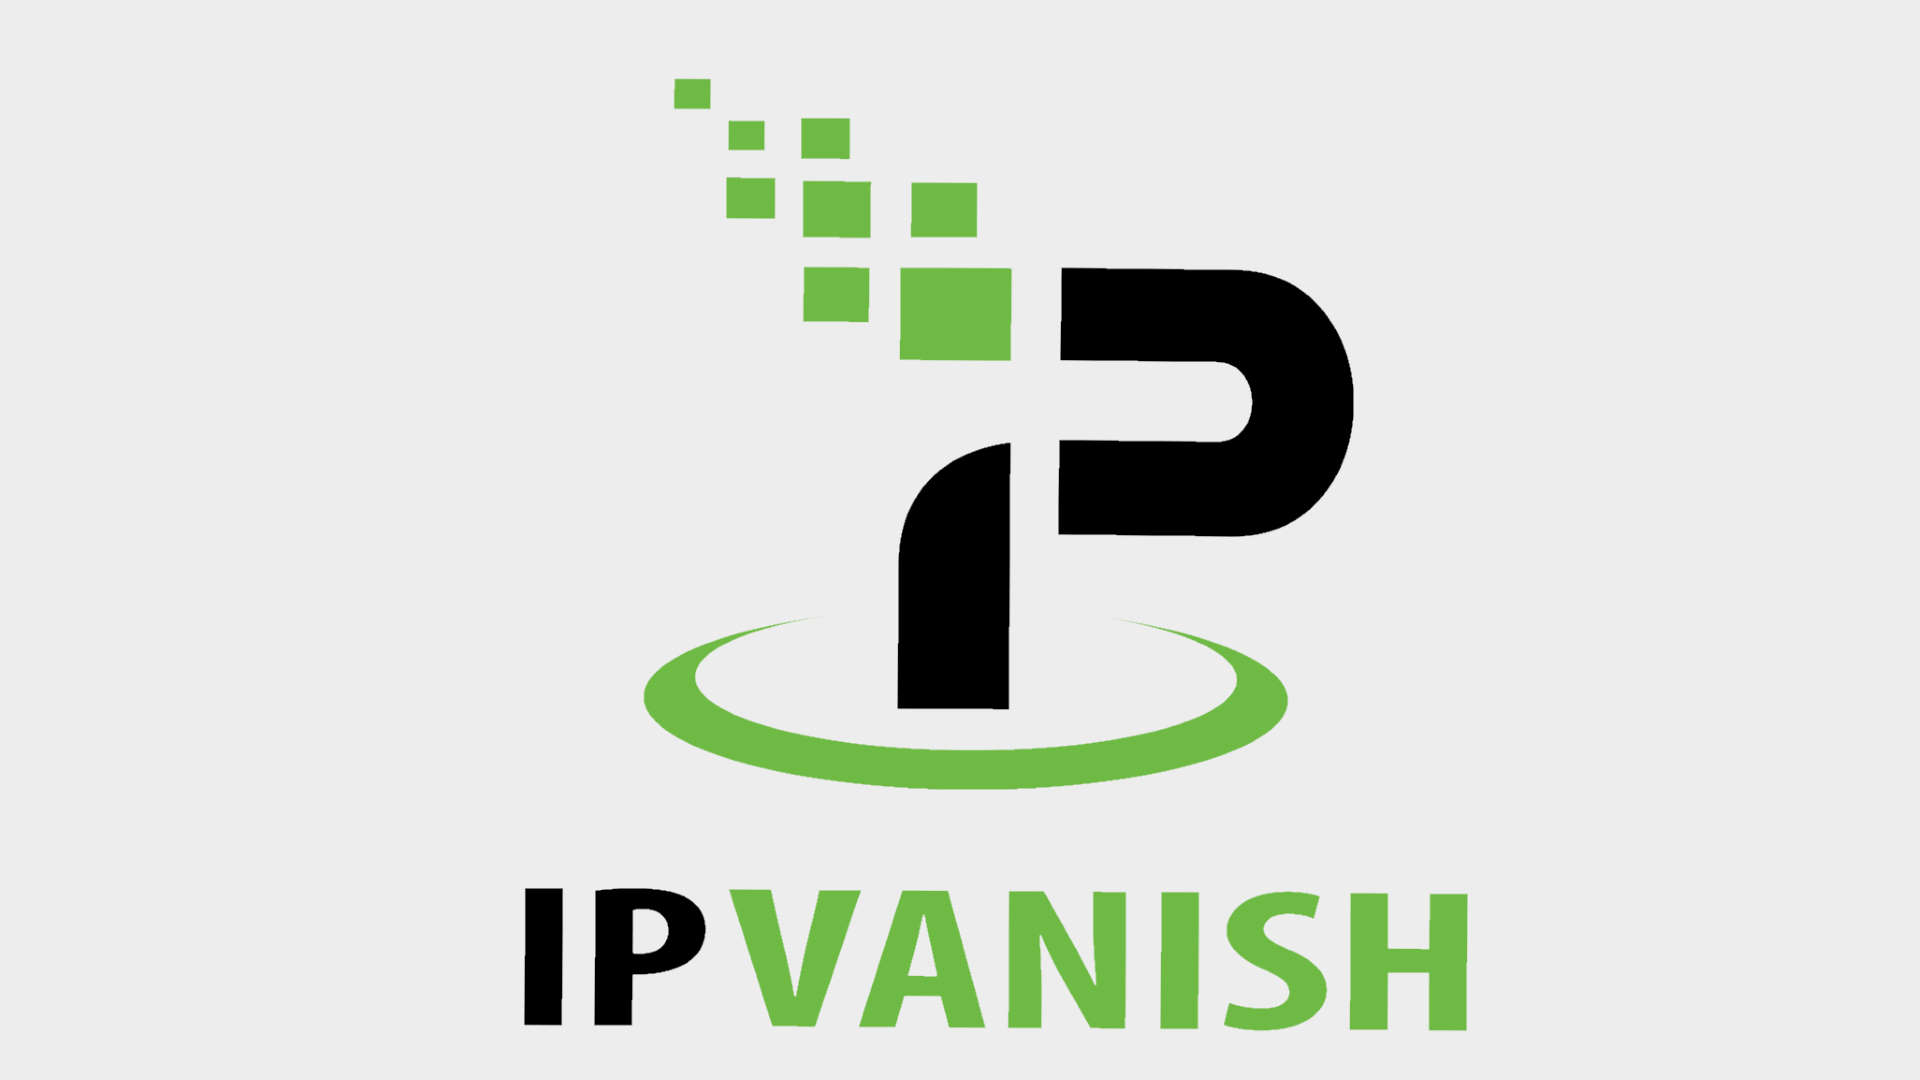 IPVanish logo on a grey background